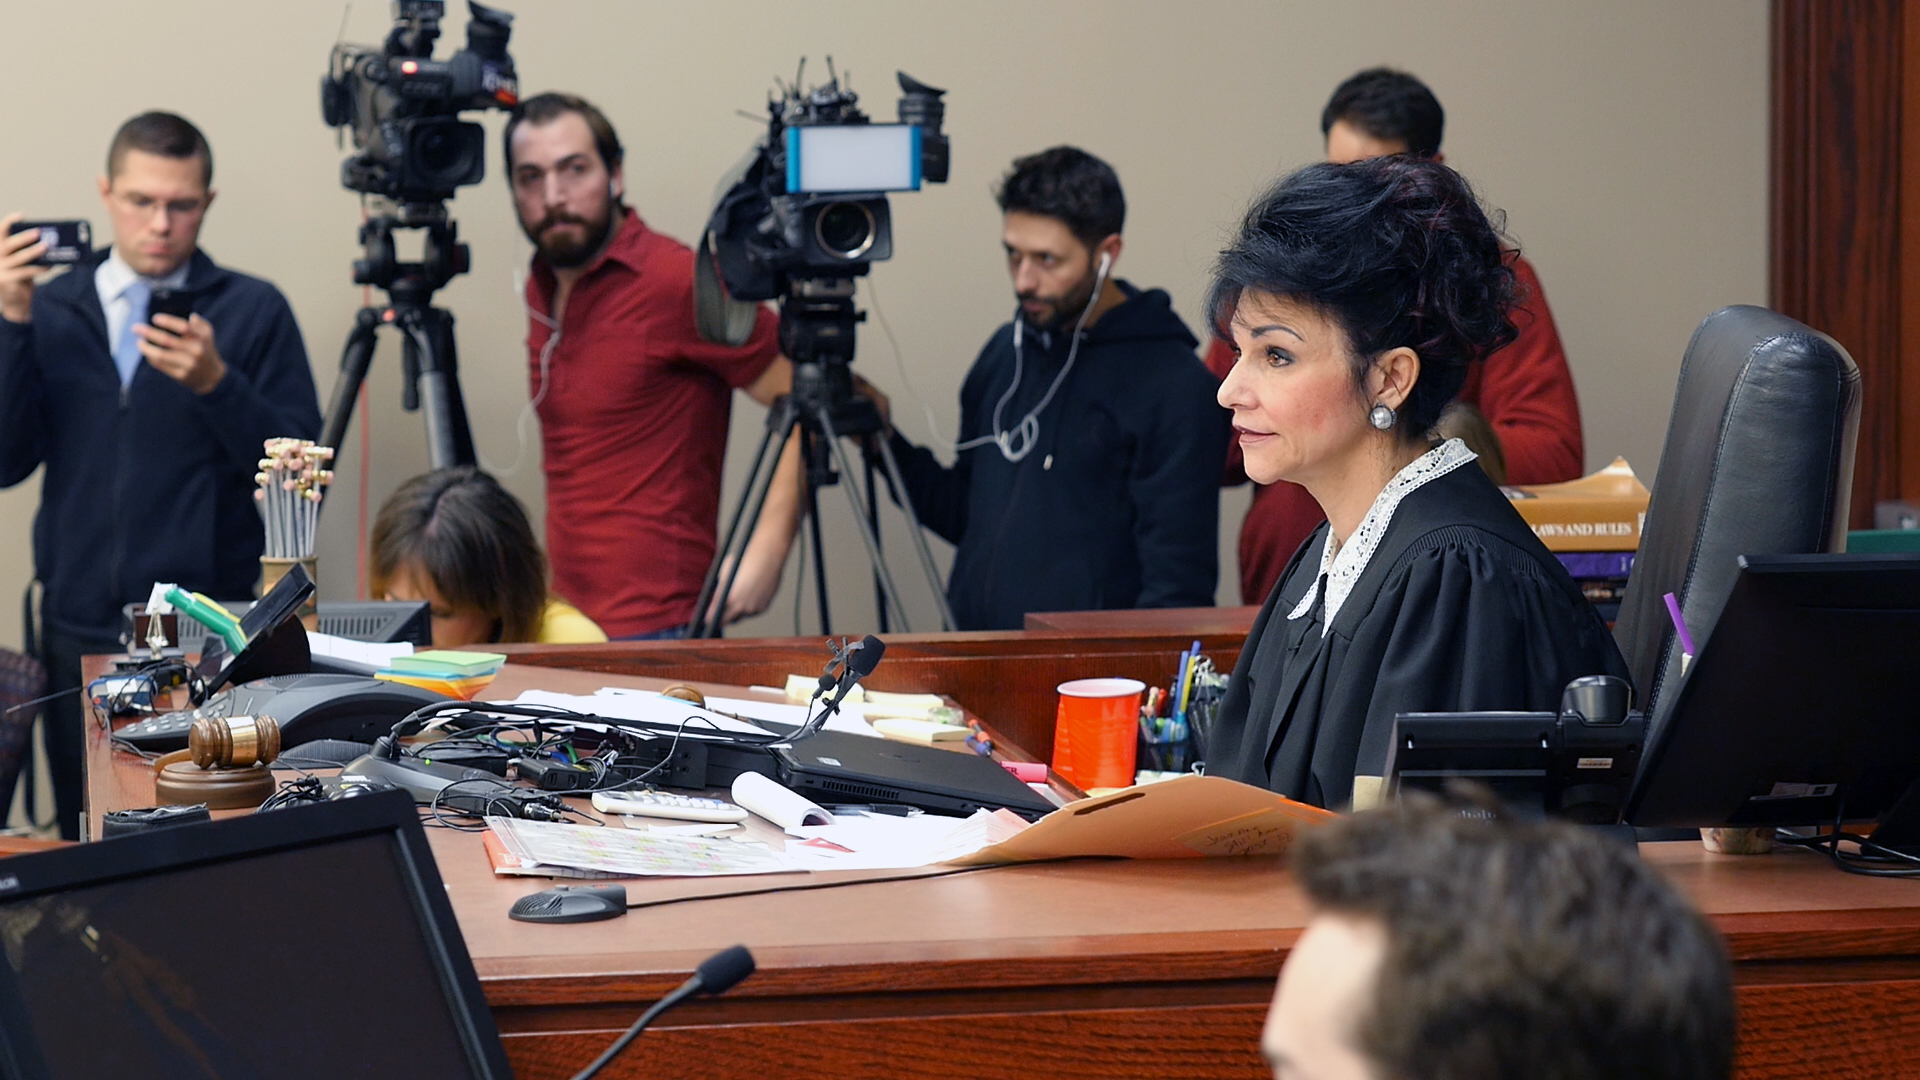 Judge Rosemarie Aqualina during the Michigan trial of Dr. Larry Nassar.